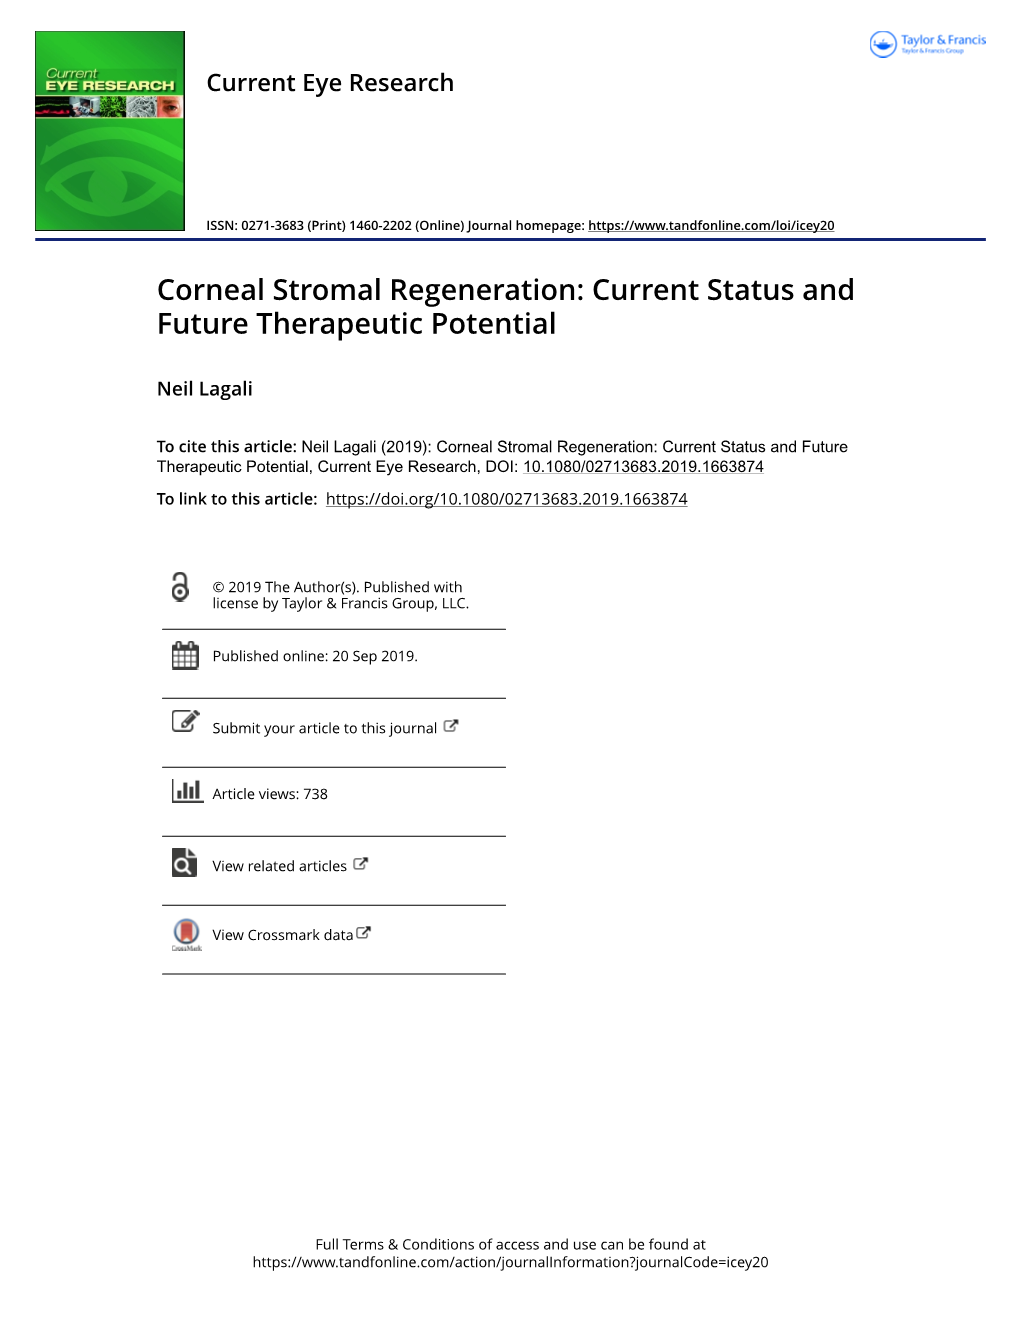 Corneal Stromal Regeneration: Current Status and Future Therapeutic Potential